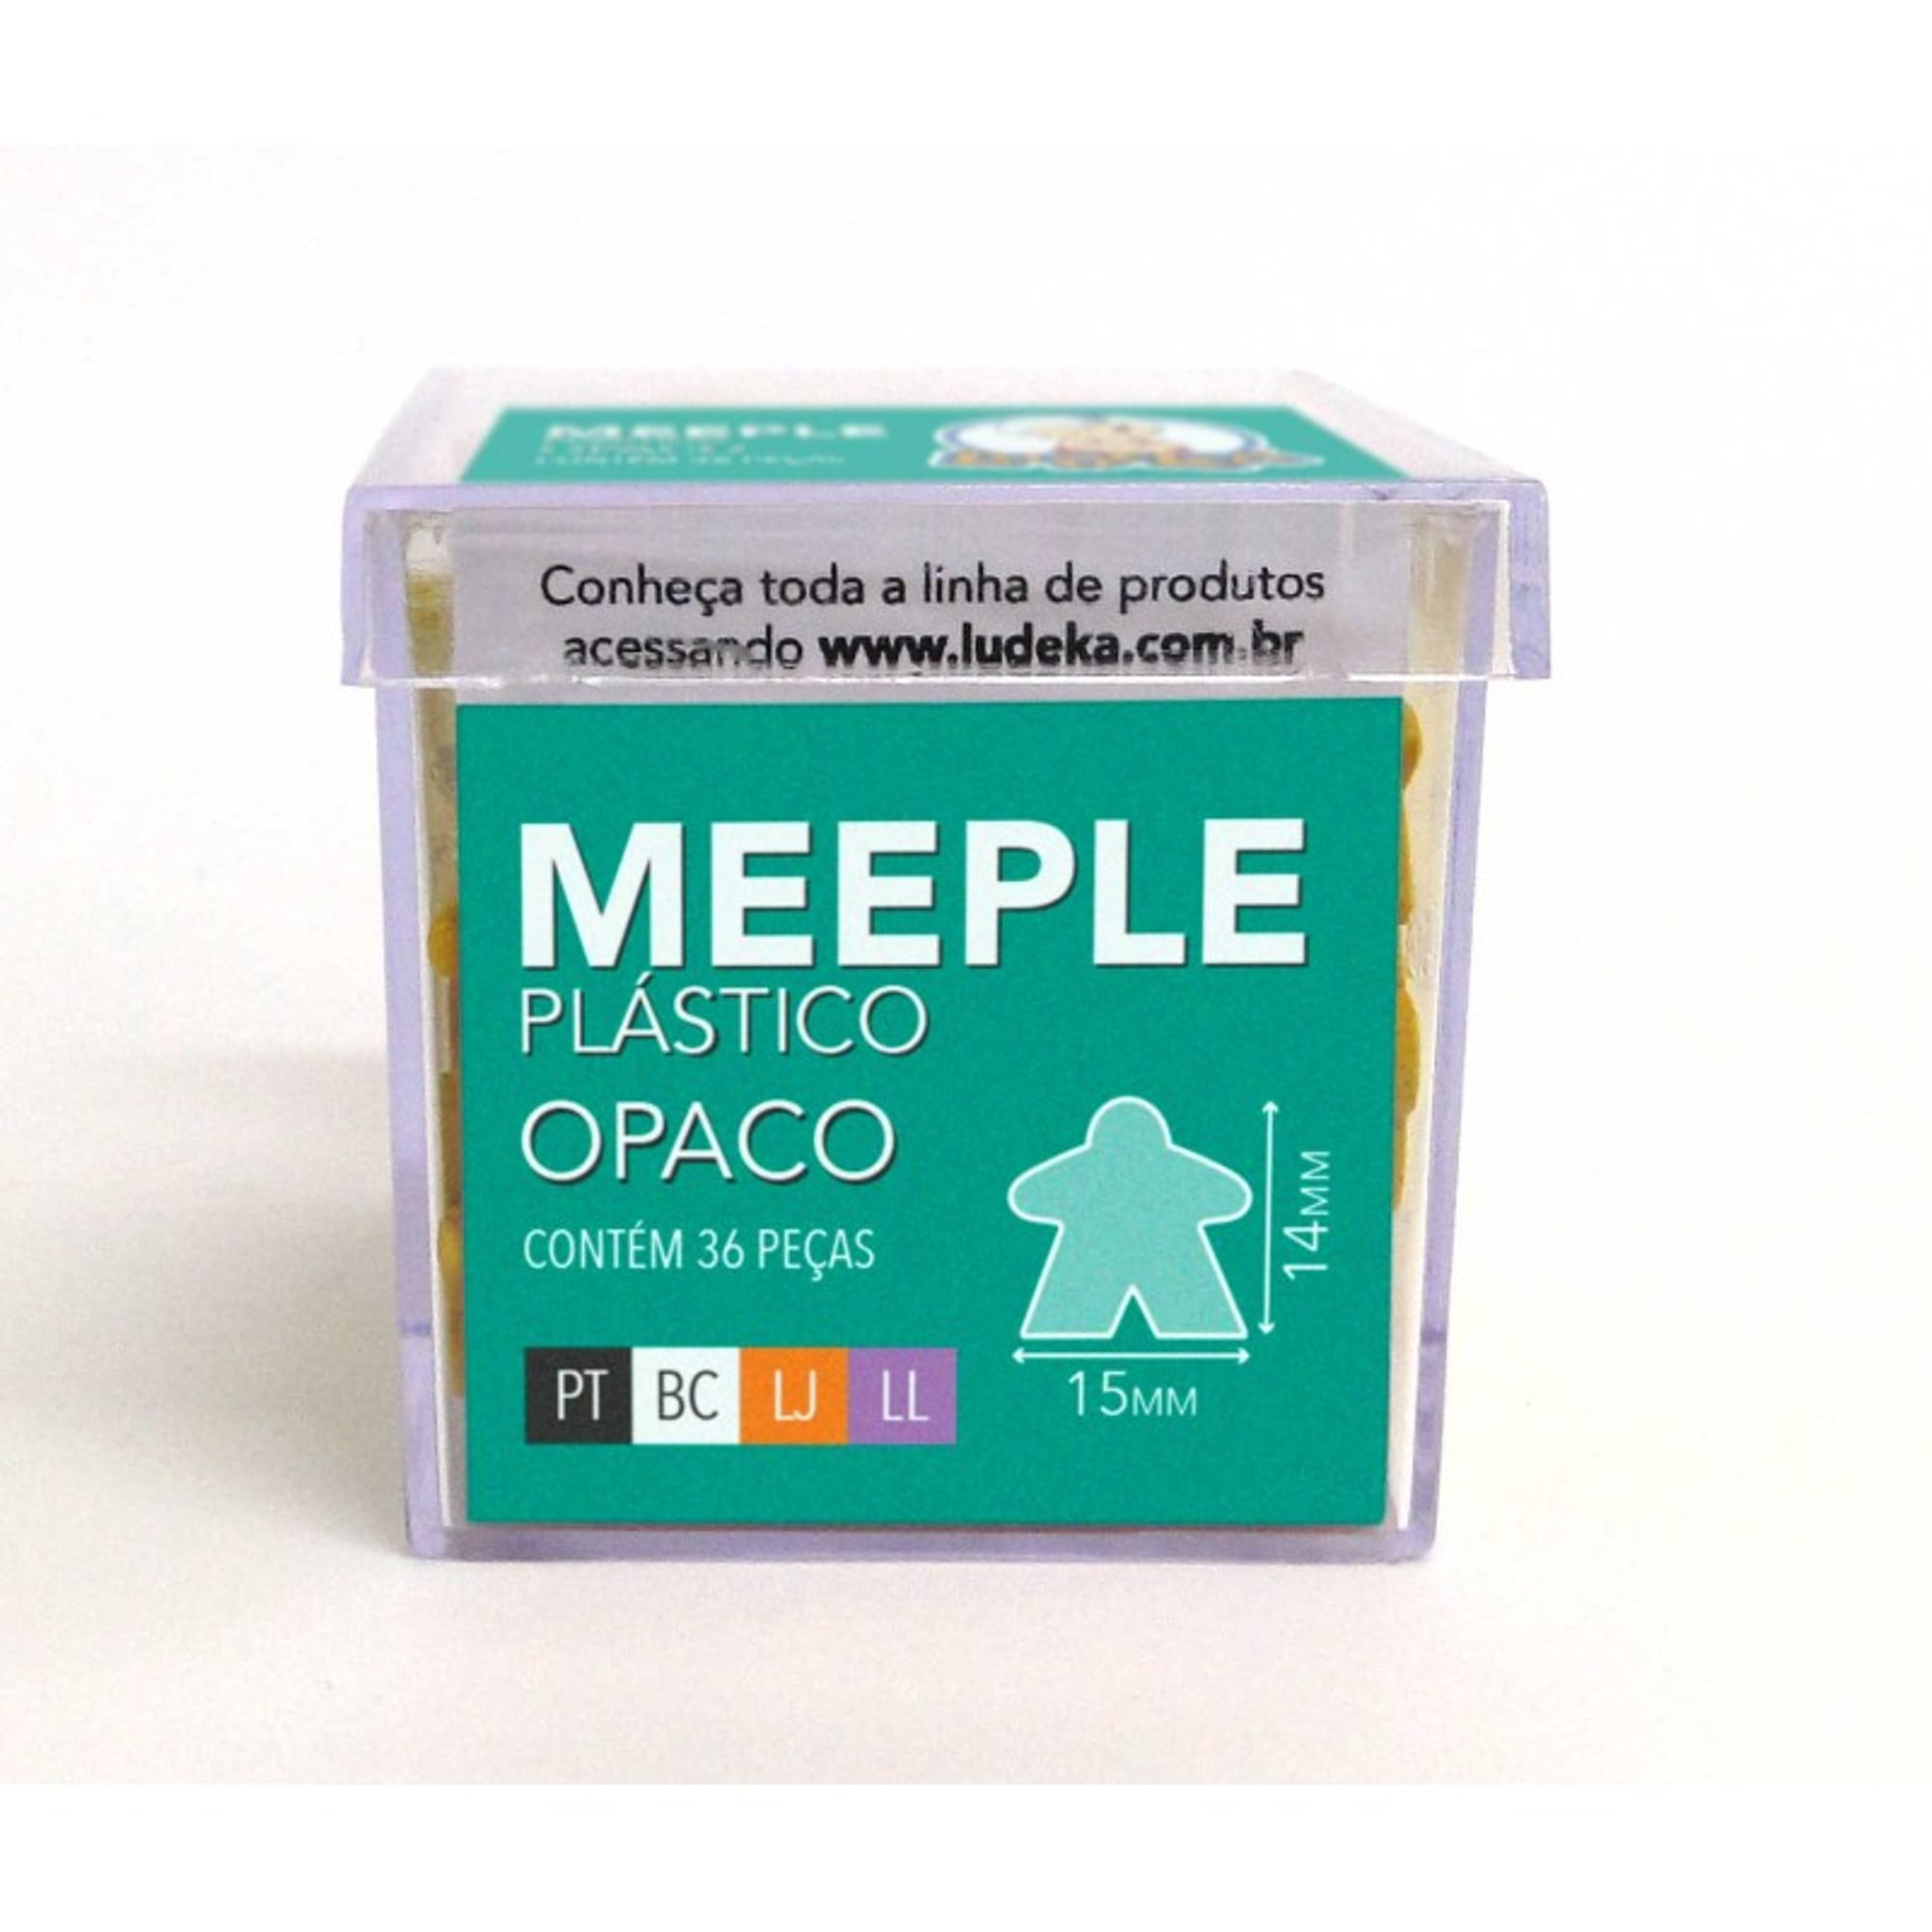 Meeple Plástico Opaco 36 Peças Preto, Branco, Laranja e Lilás